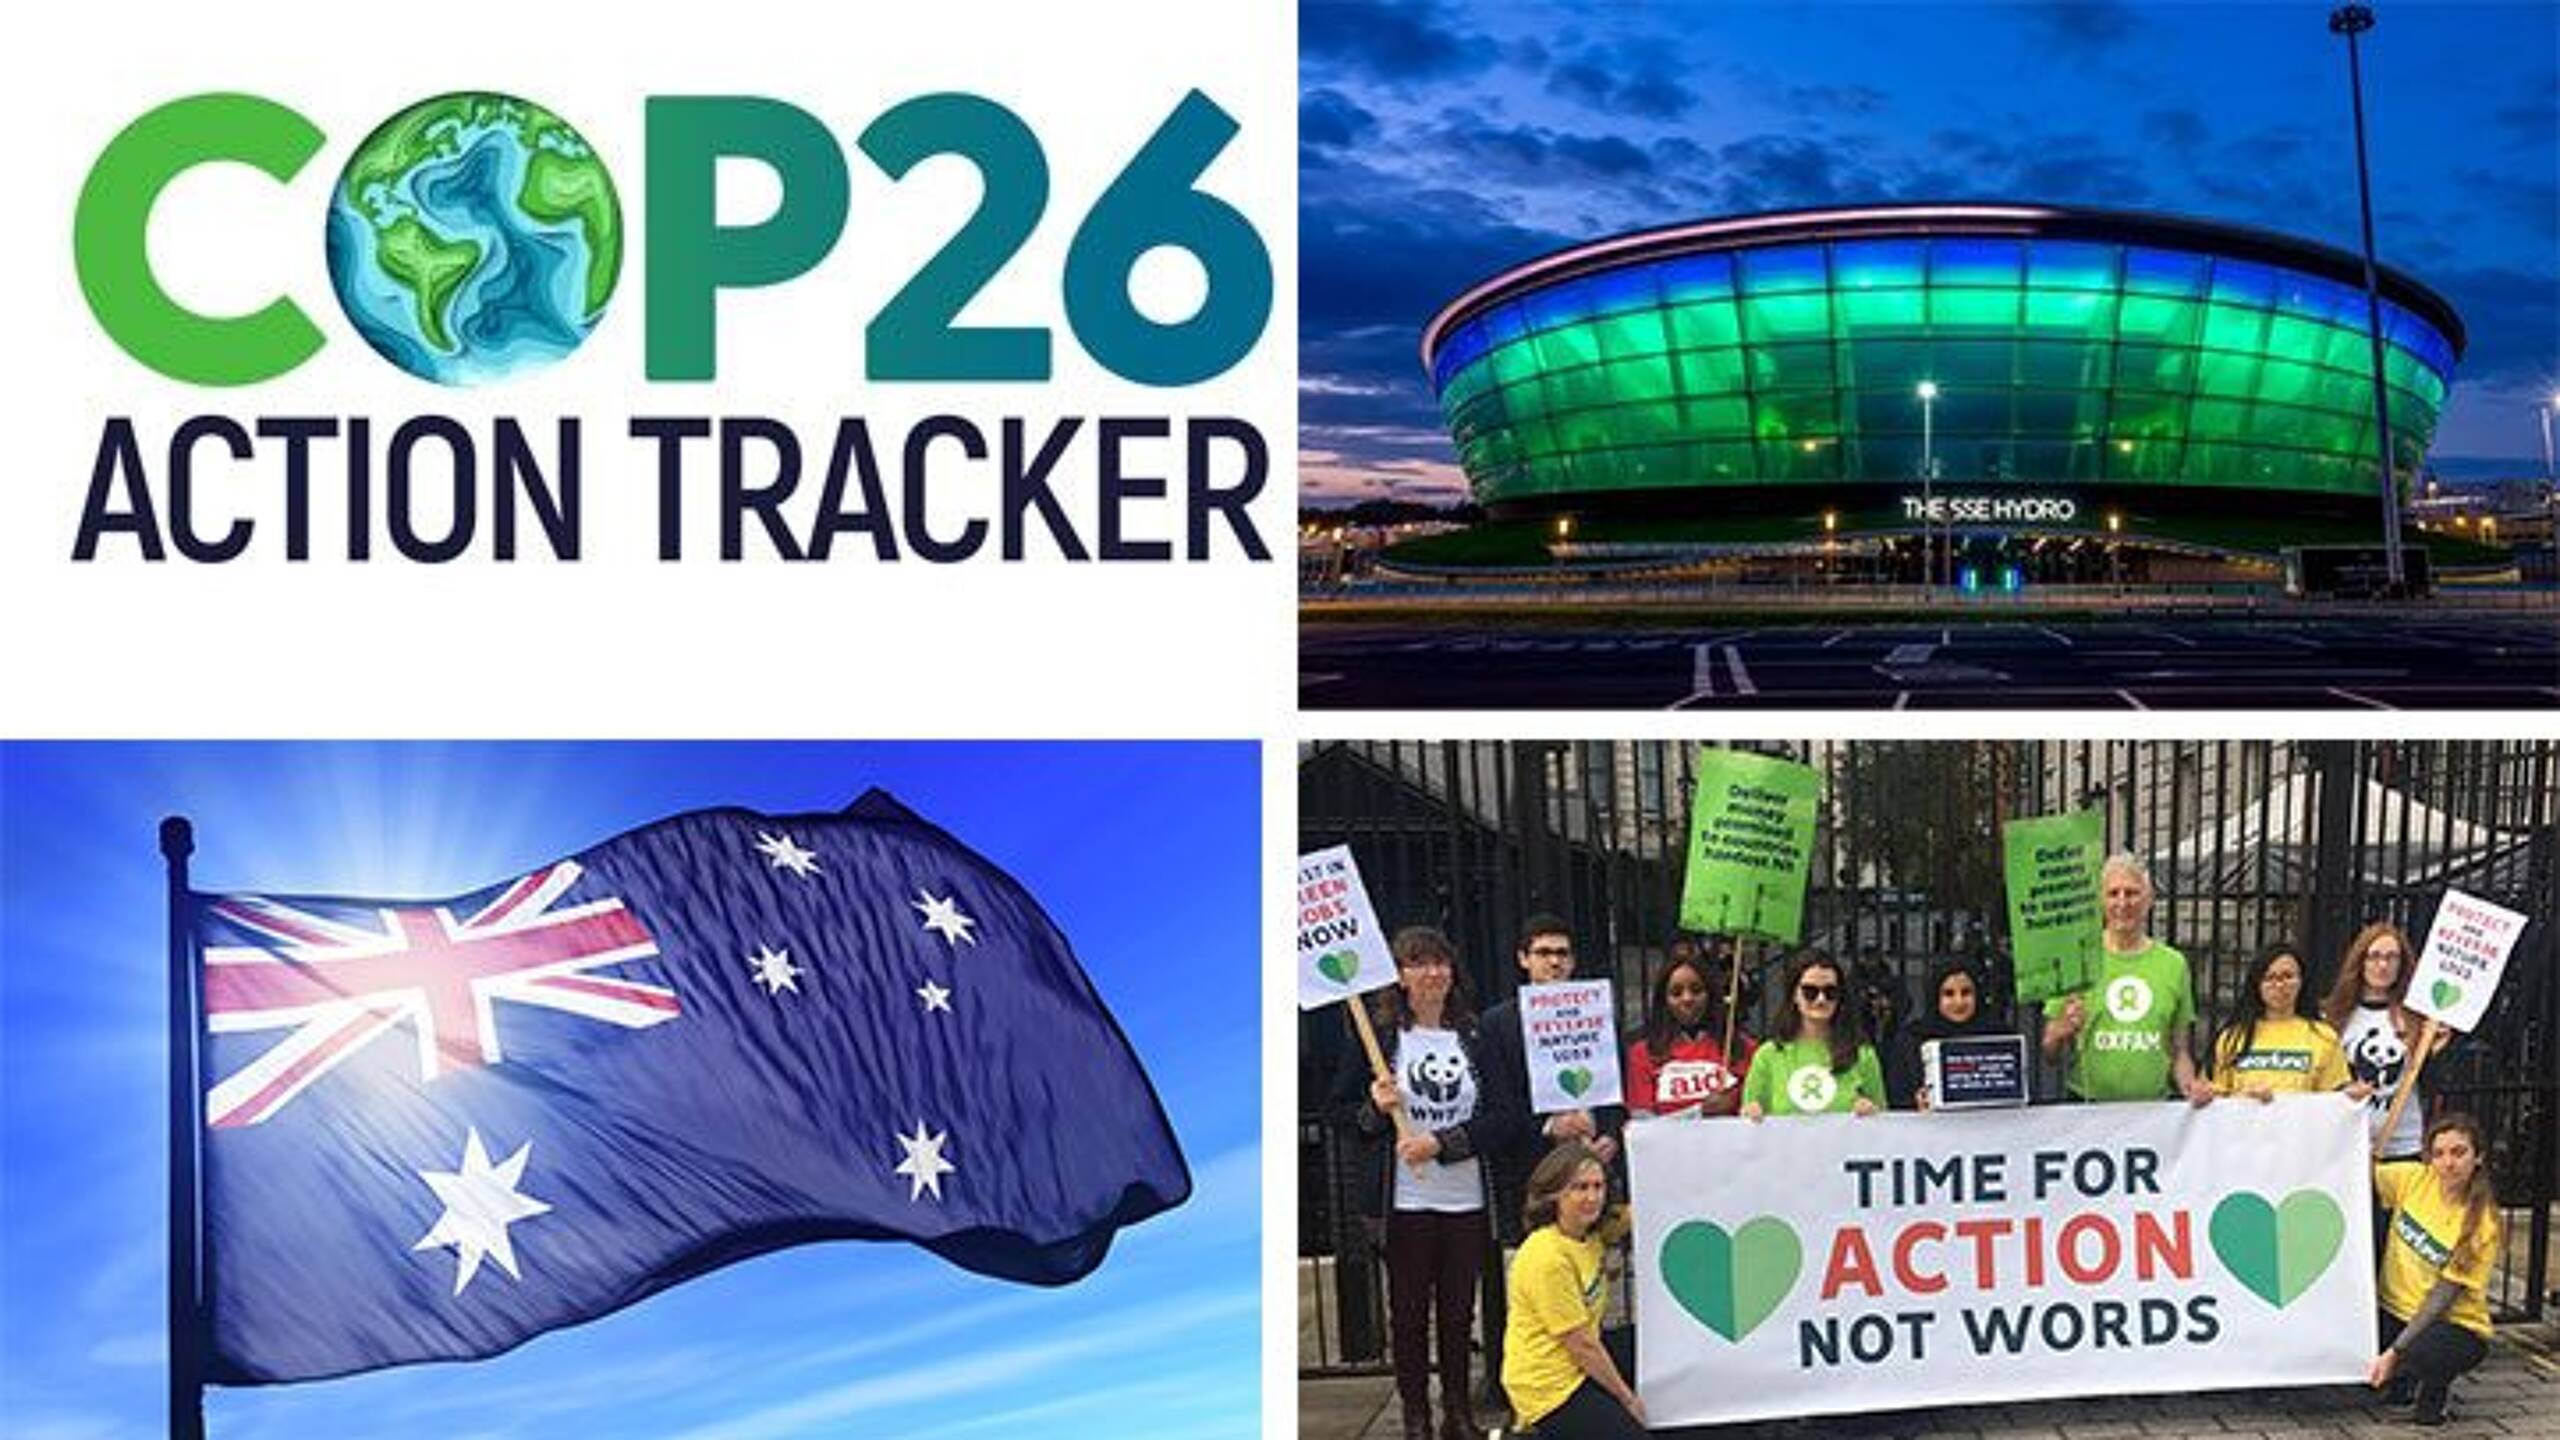 COP26 Action Tracker: Australia and Saudi Arabia set net-zero goals, questions remain about logistics of summit